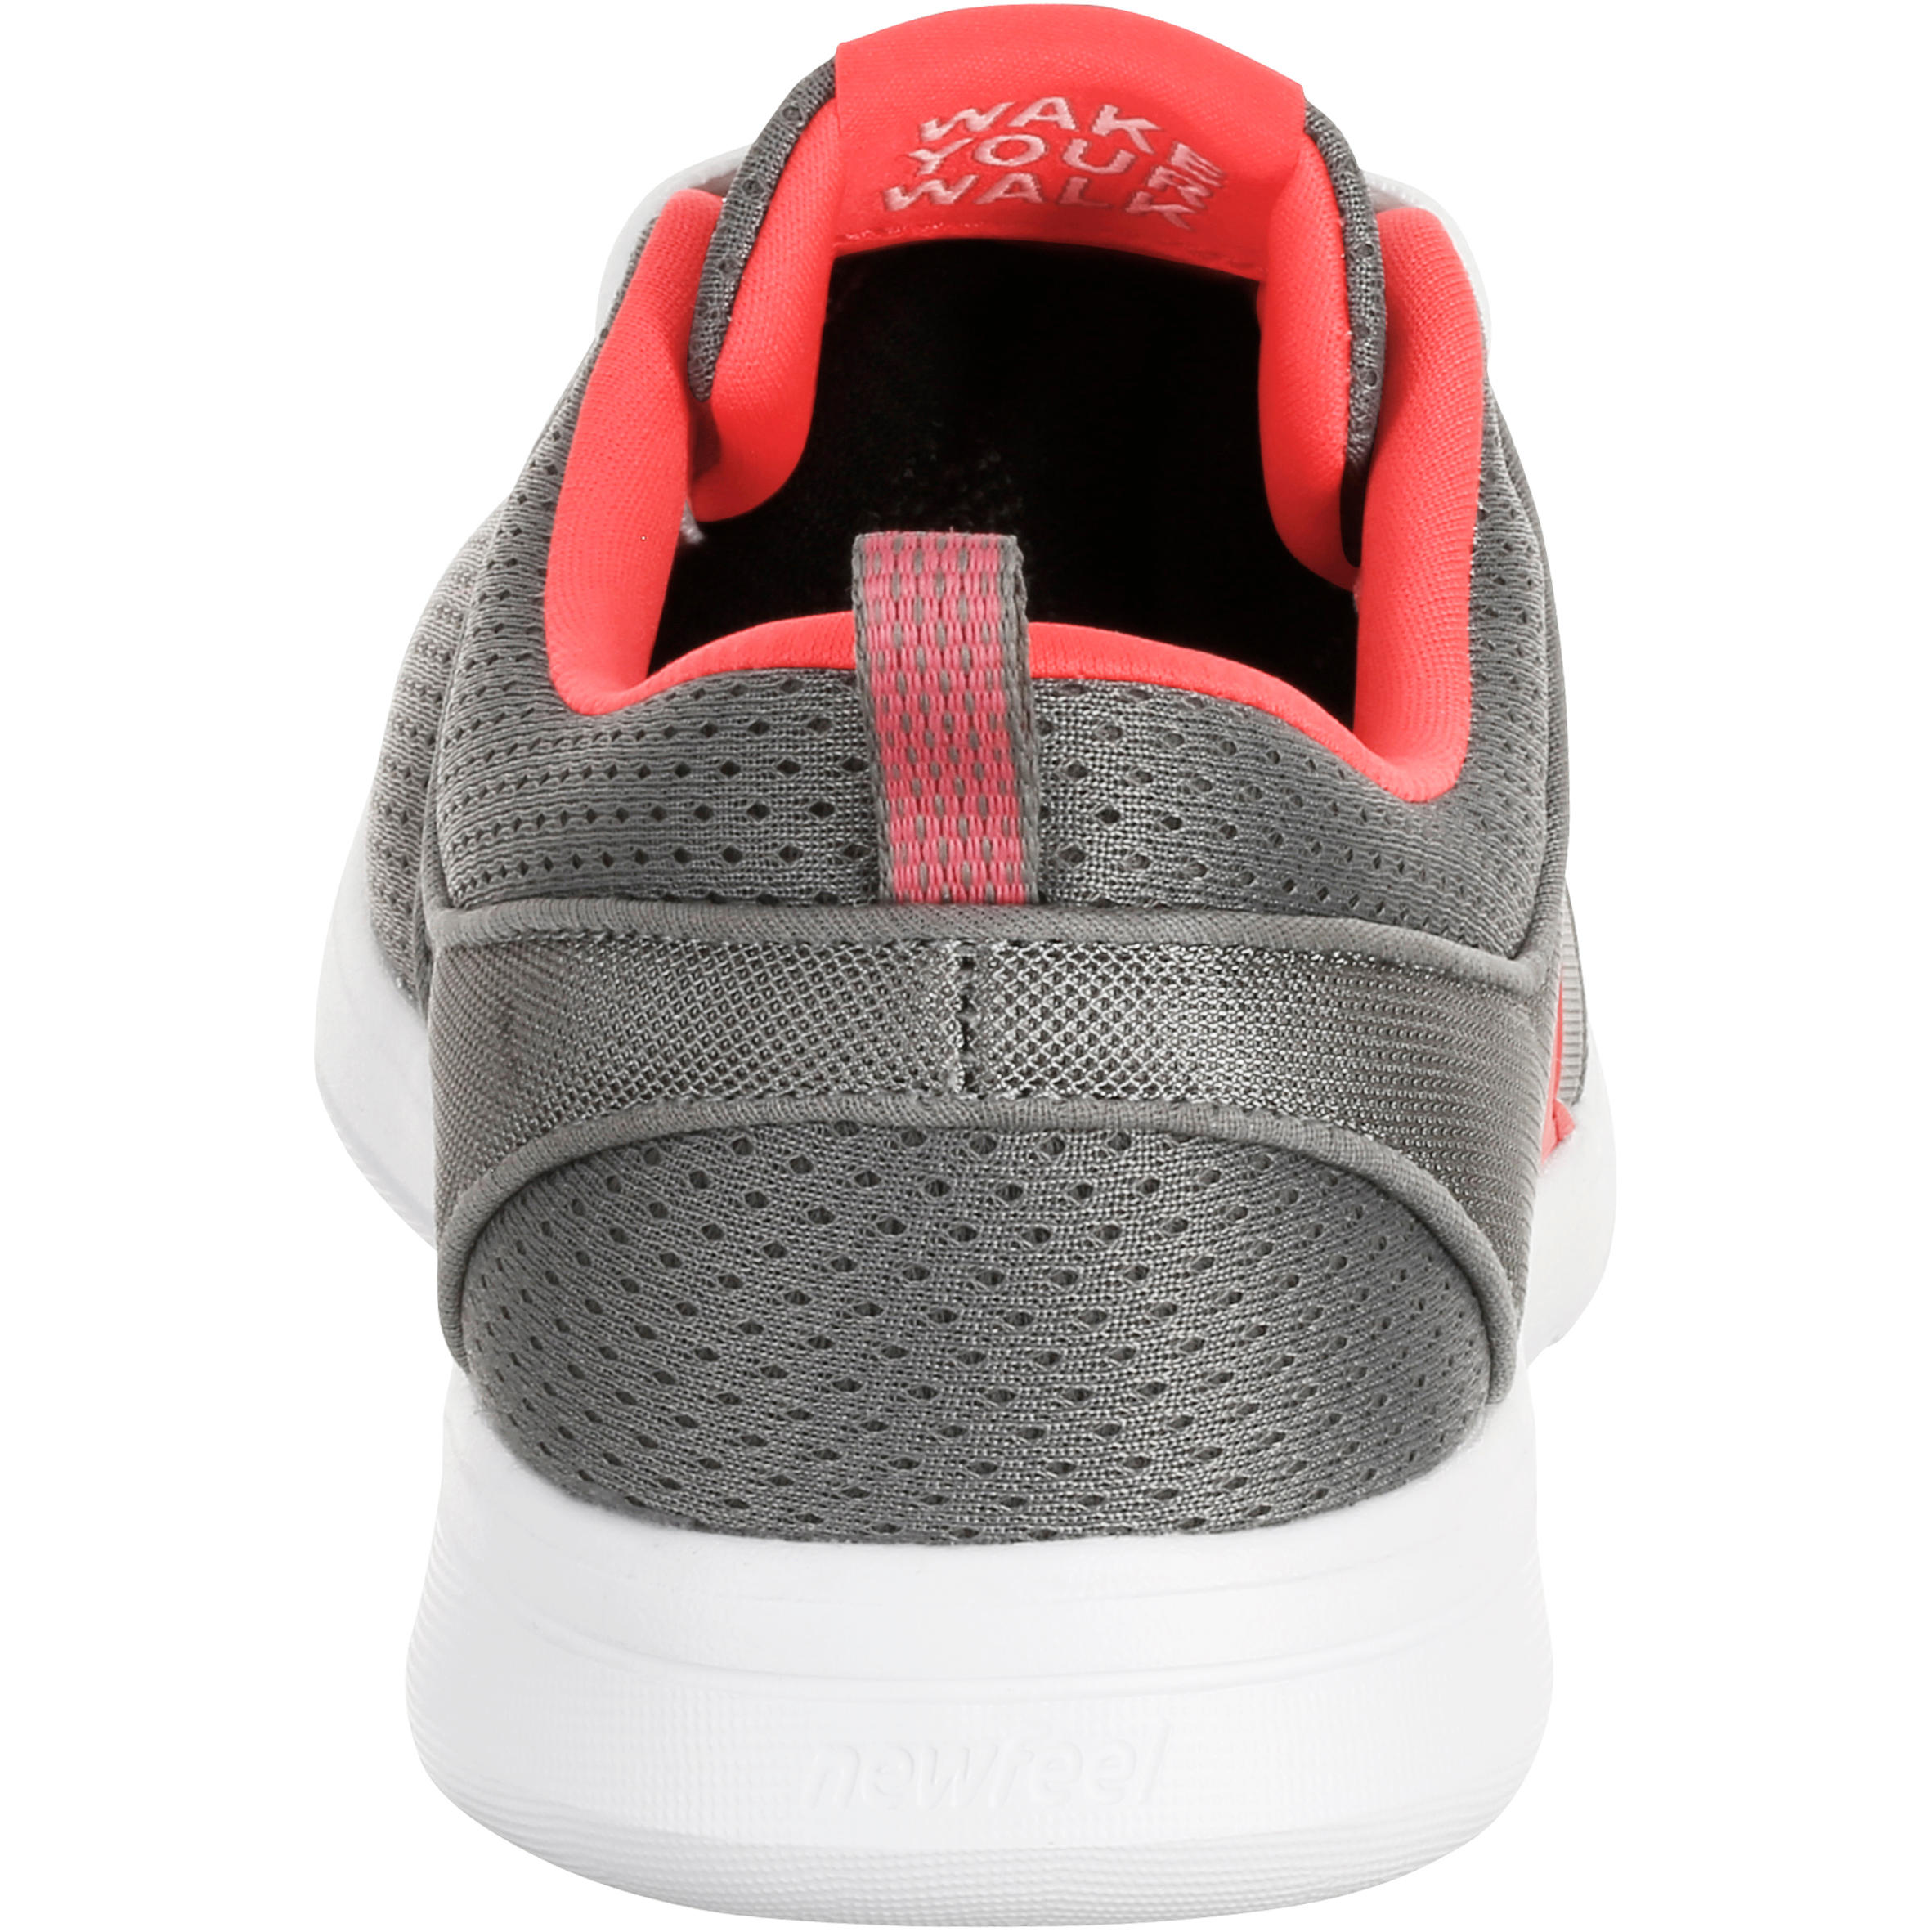 Women's Urban Walking Shoes - Soft 140.2 Black